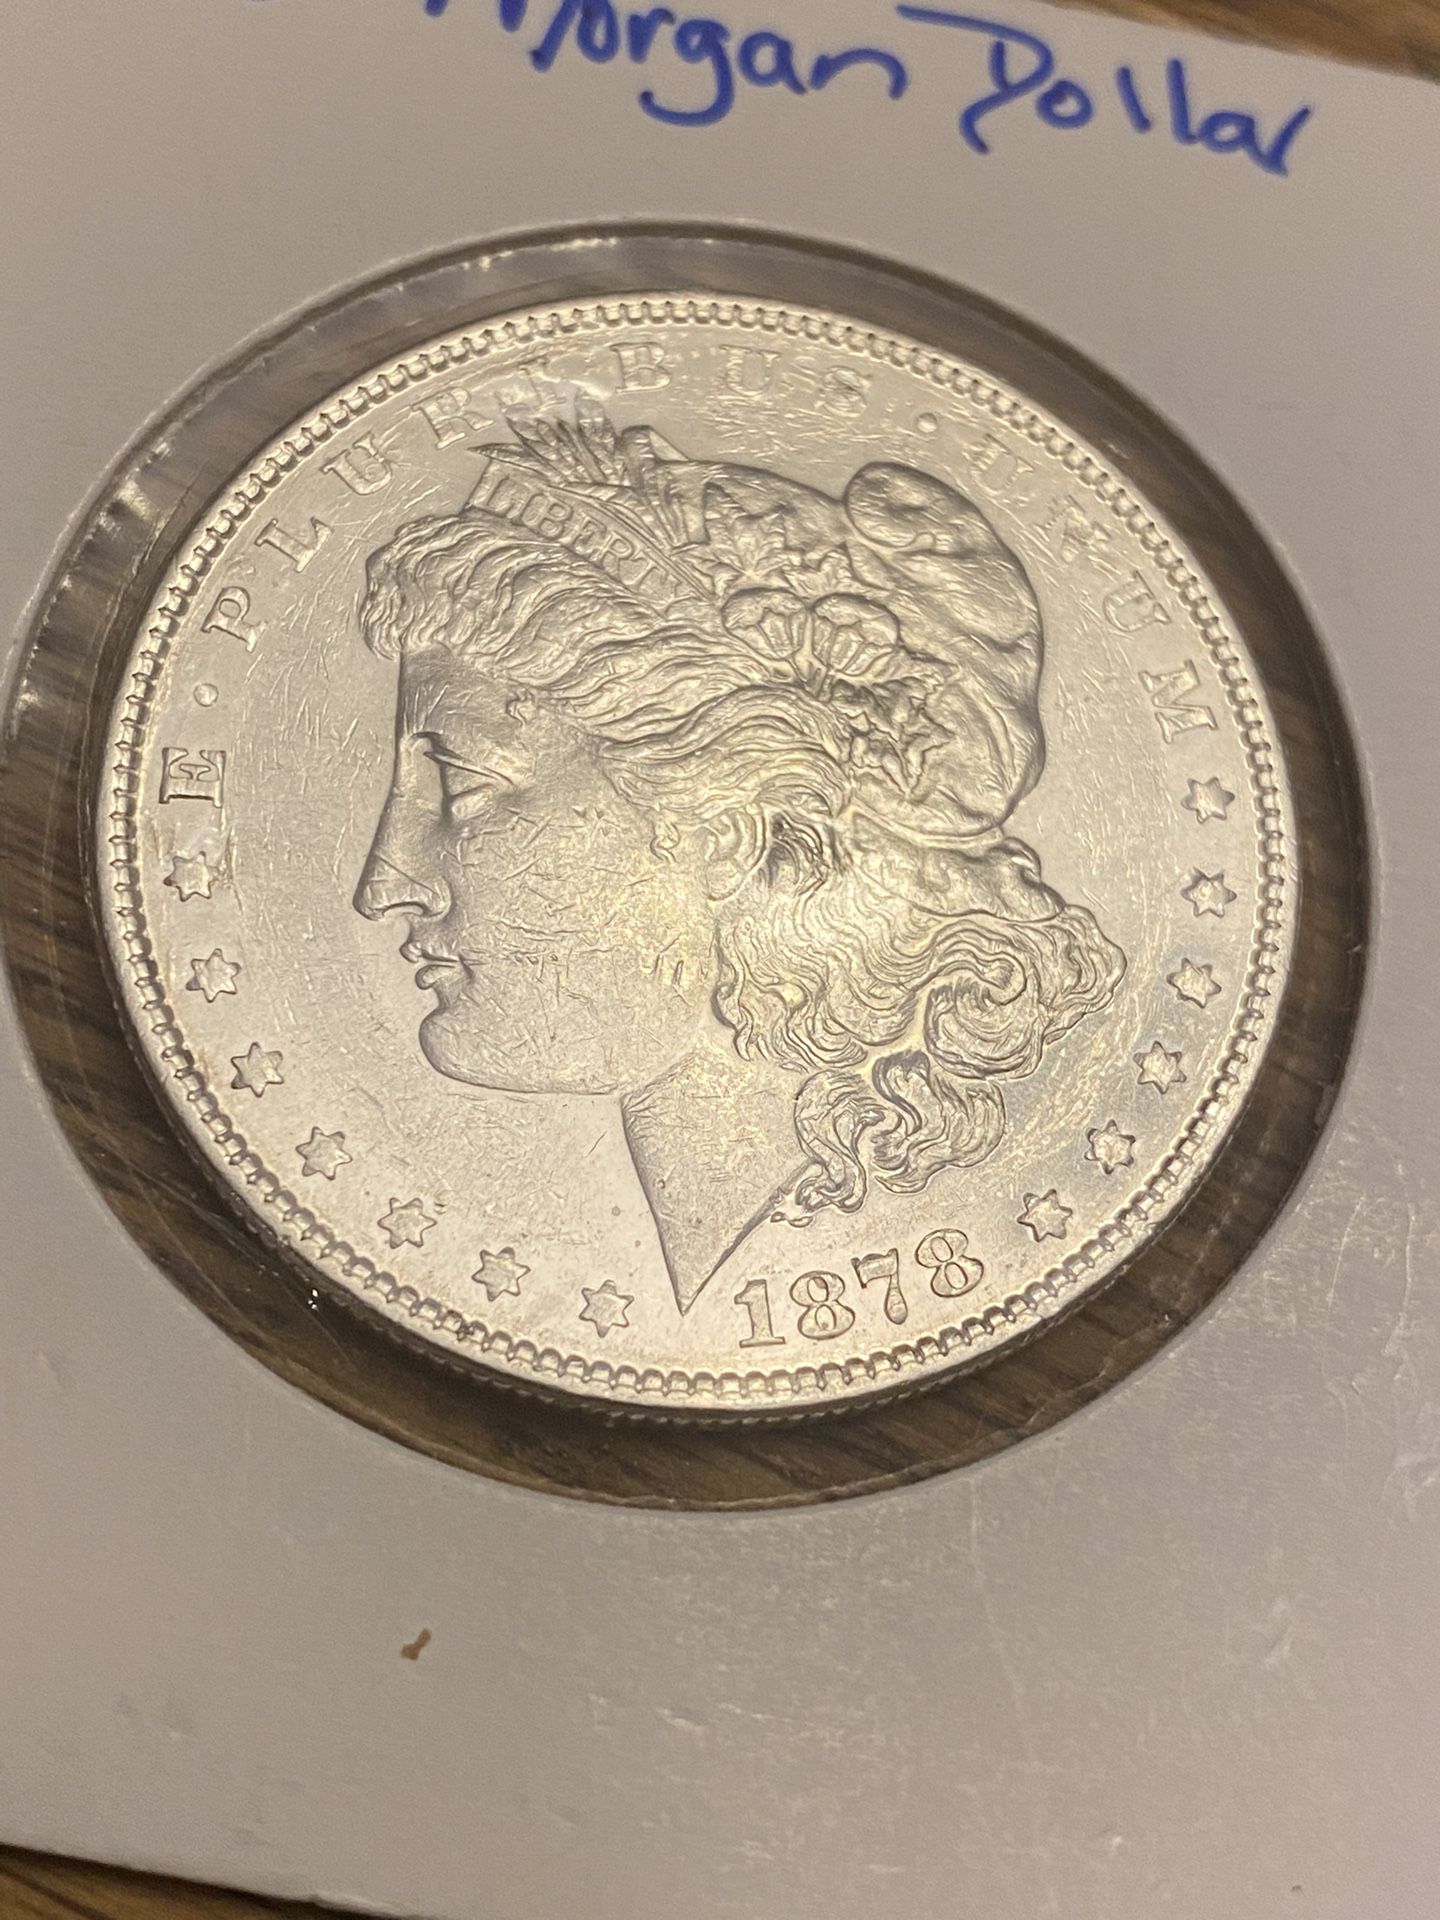 1878 Morgan Silver Dollar 